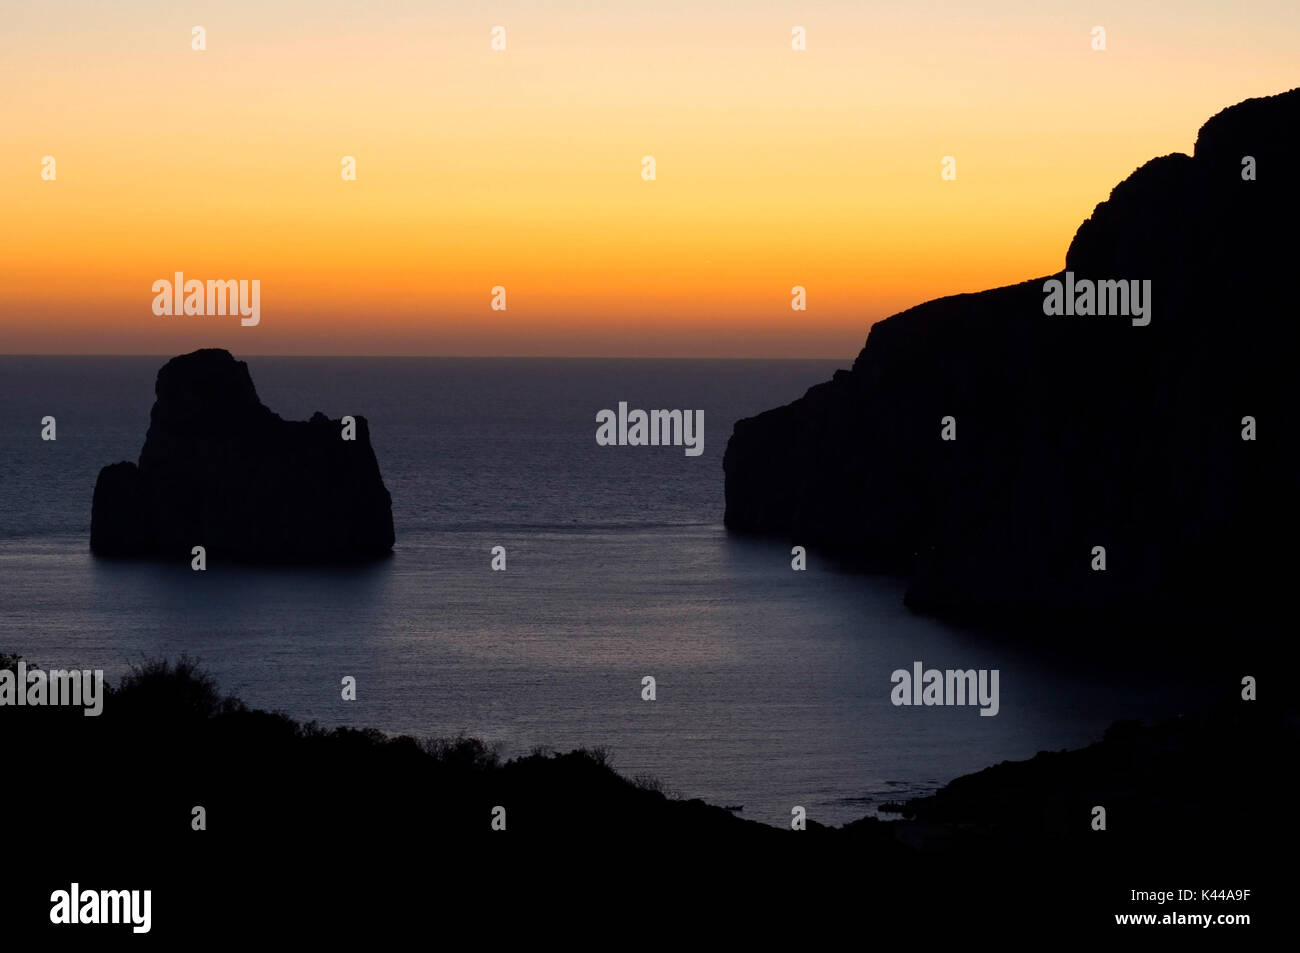 Europe, Italy, Sardinia region, Iglesias district, Masua village. The island of Pan di Zucchero in silhouette at dusk. Stock Photo